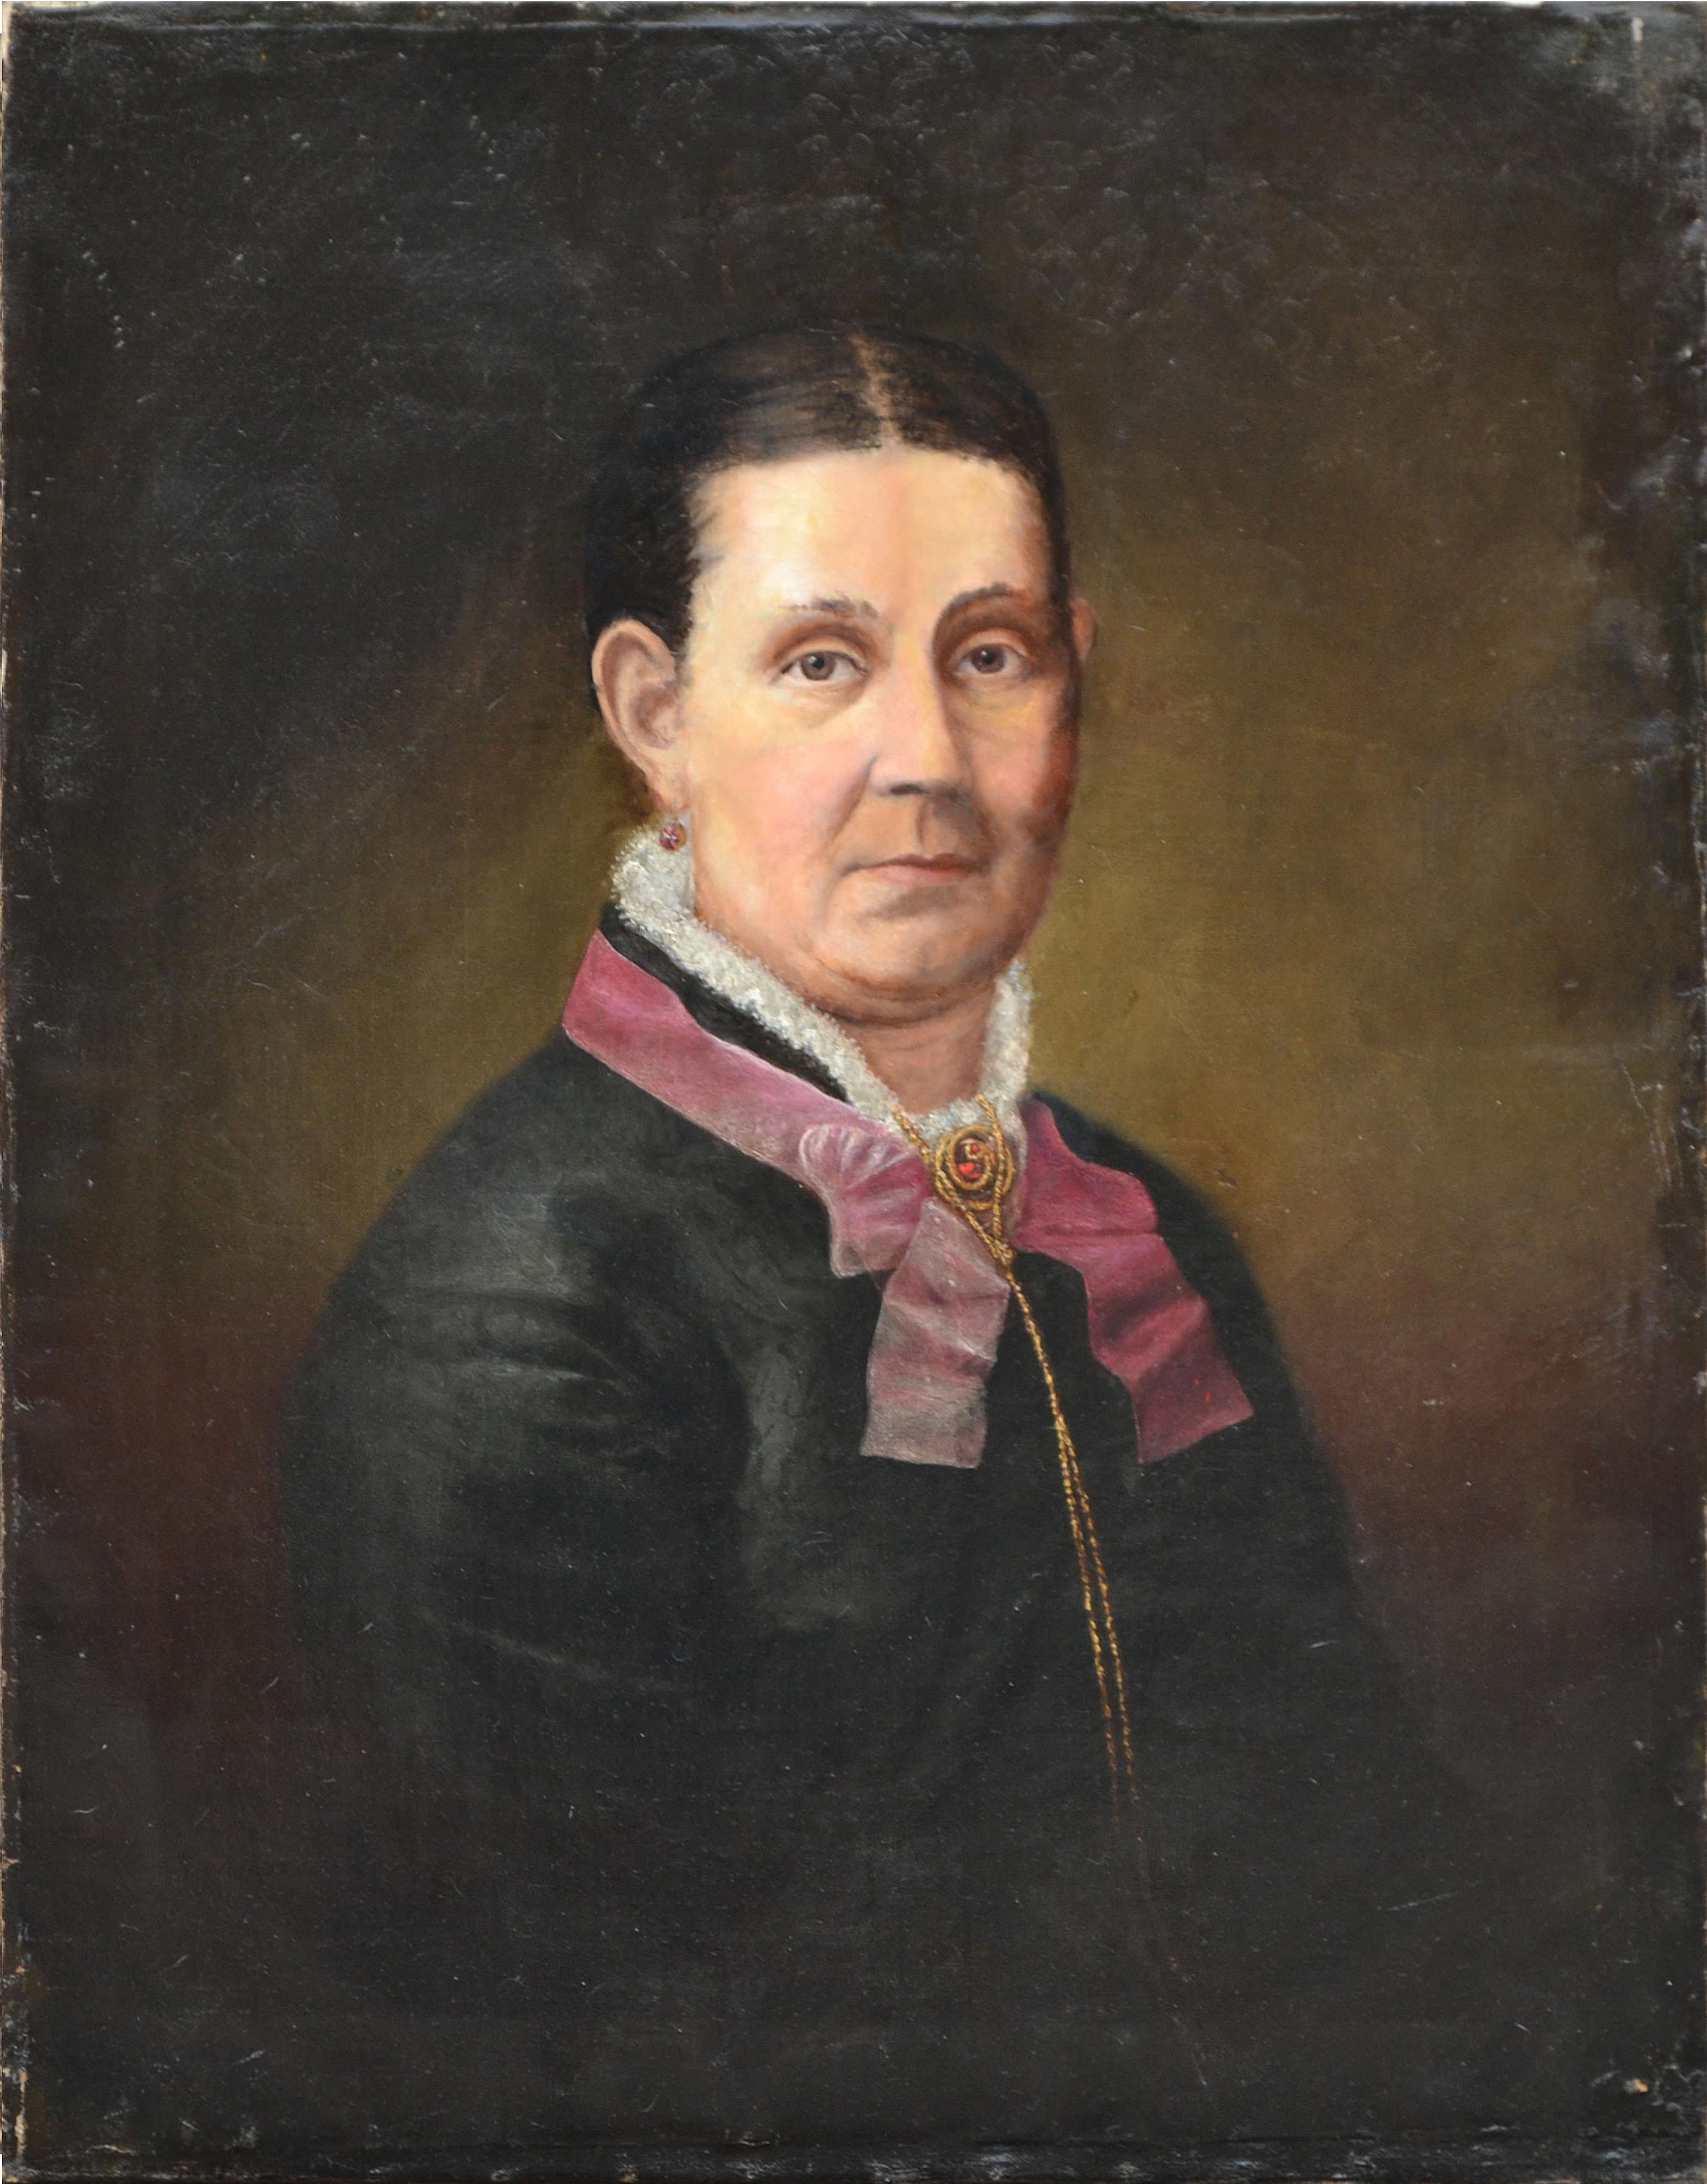 Unknown Portrait Painting - Woman of Society, Antique Portrait